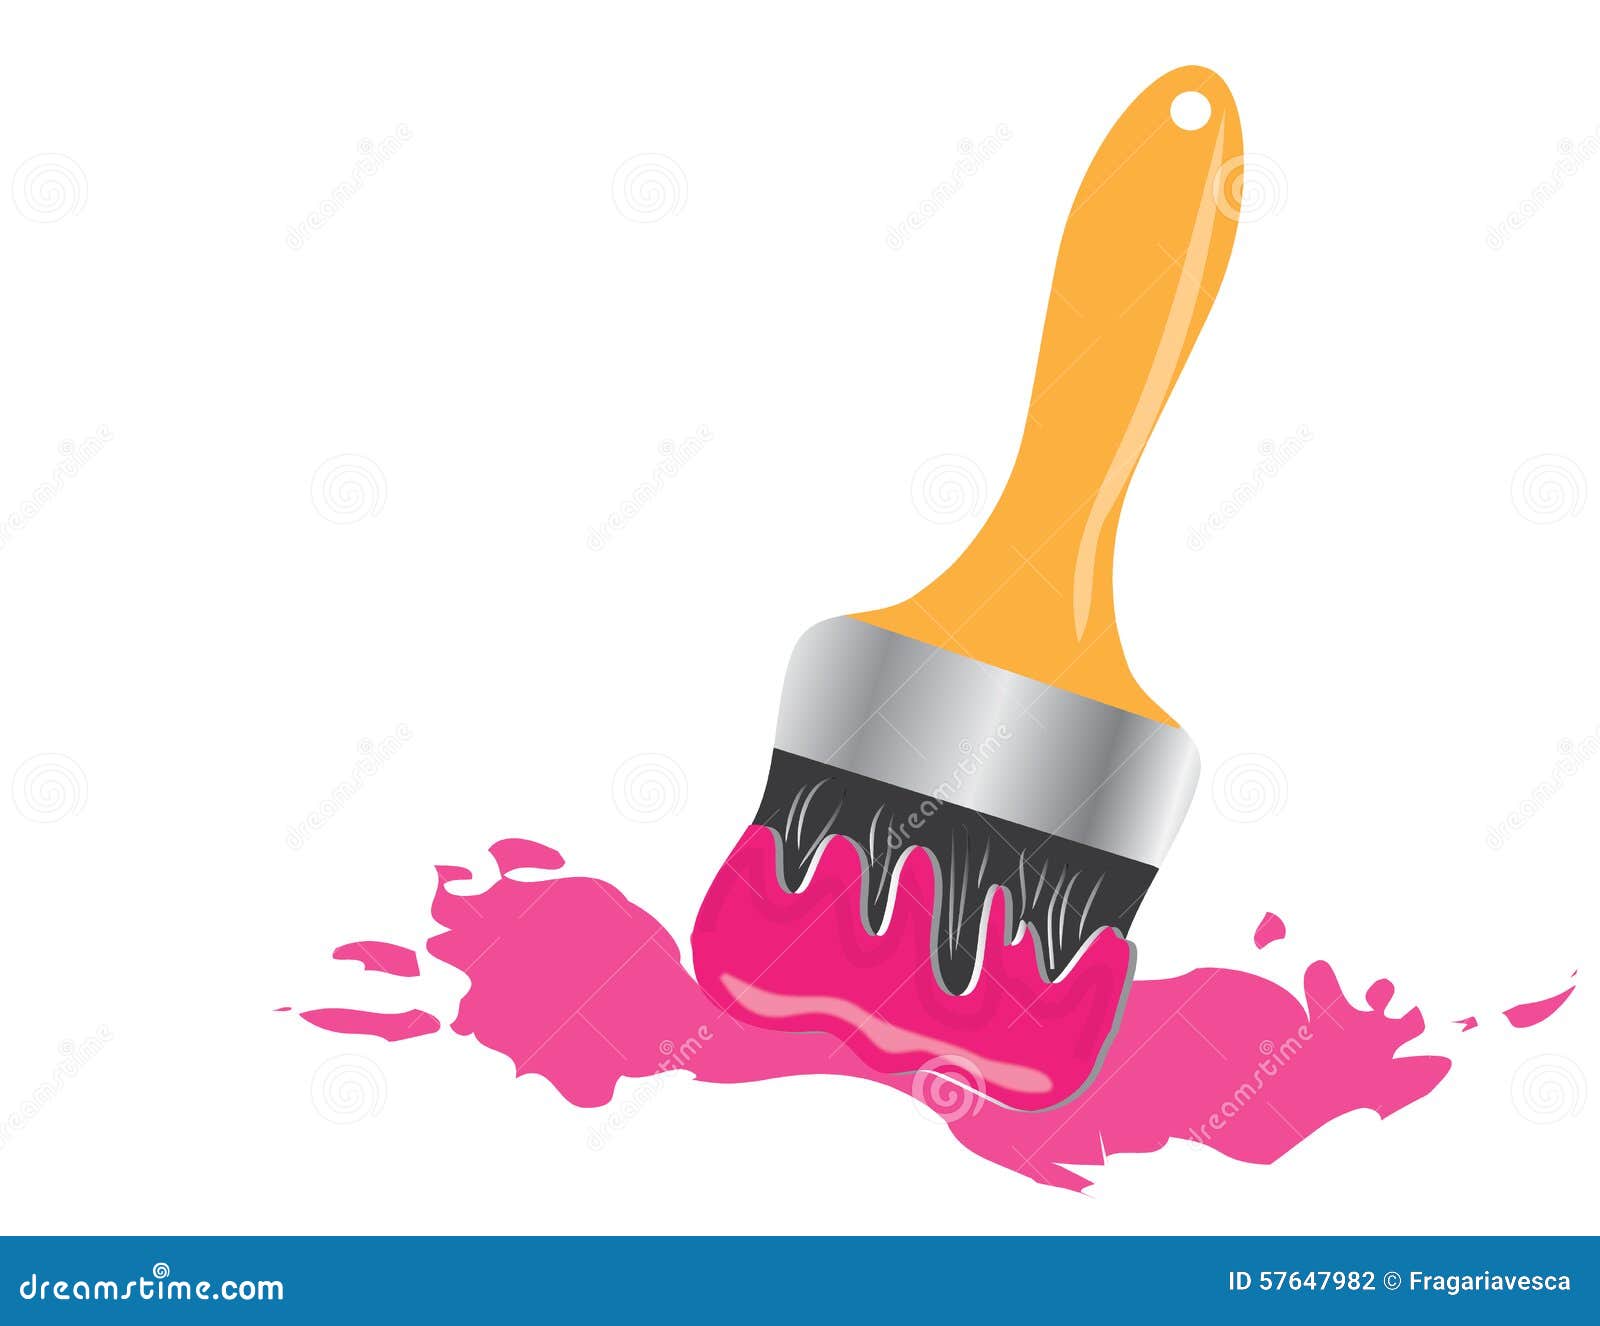 Paint brush stock vector. Illustration of splash, pink